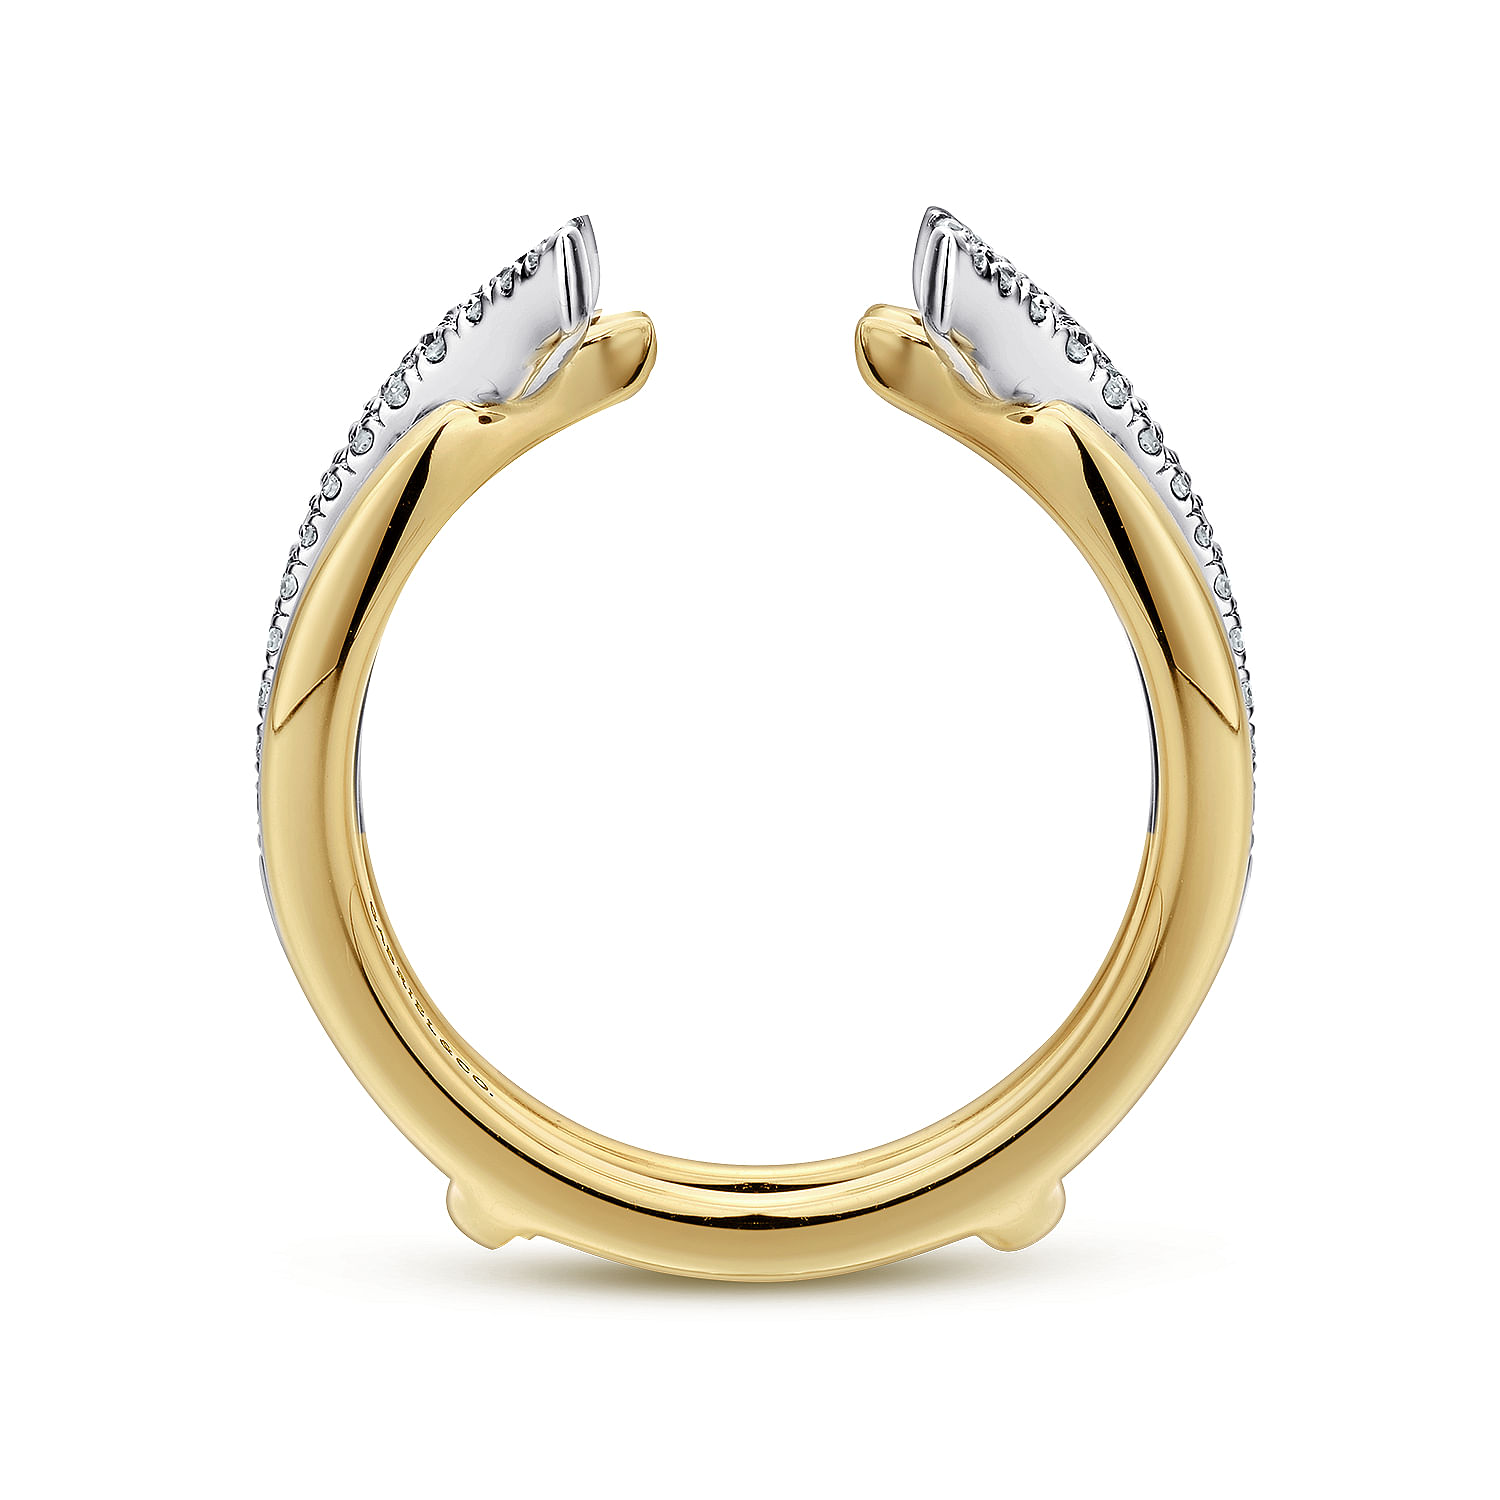 14K White and Yellow Gold Diamond Ring Enhancer